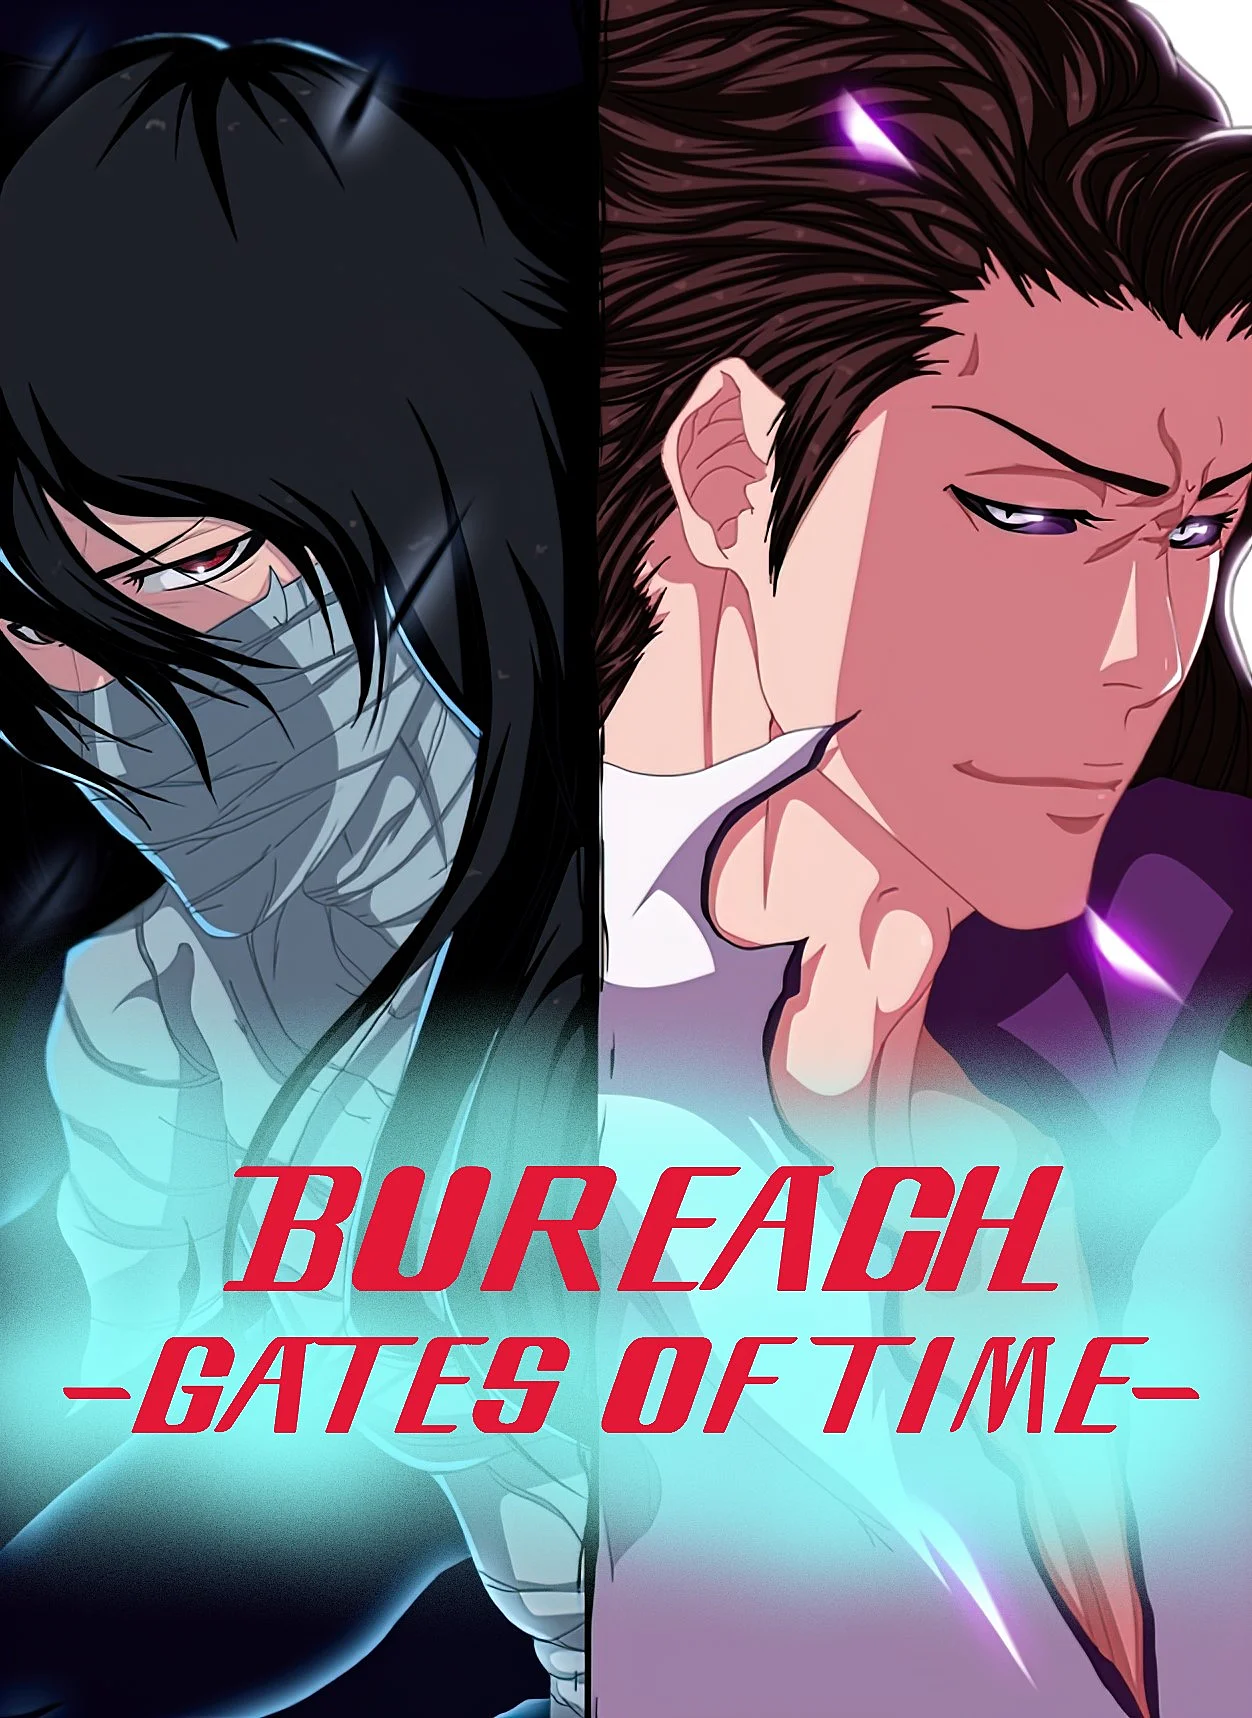 BUREACH: Gates of Time